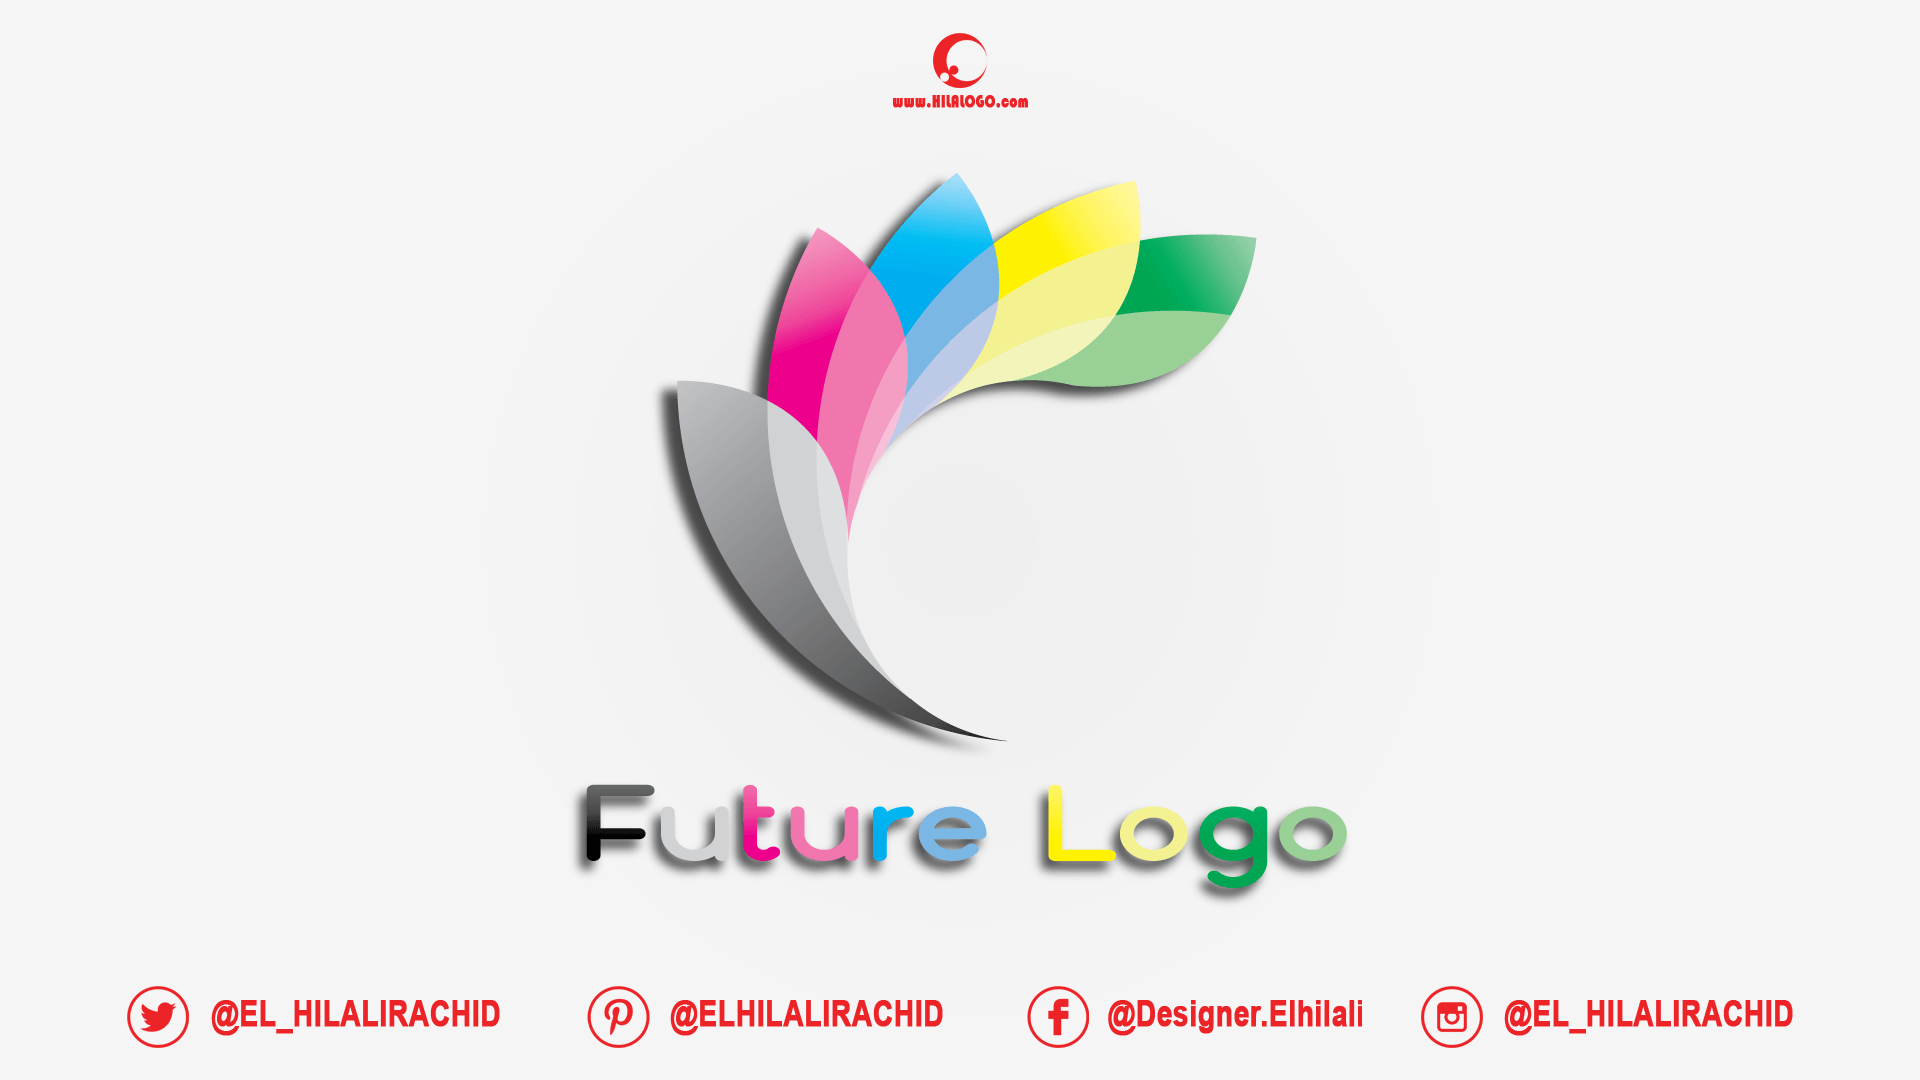 Future Logo - Future Logo Colors Using Adobe Illustrator CS6 - HILALOGO : MAKE ...